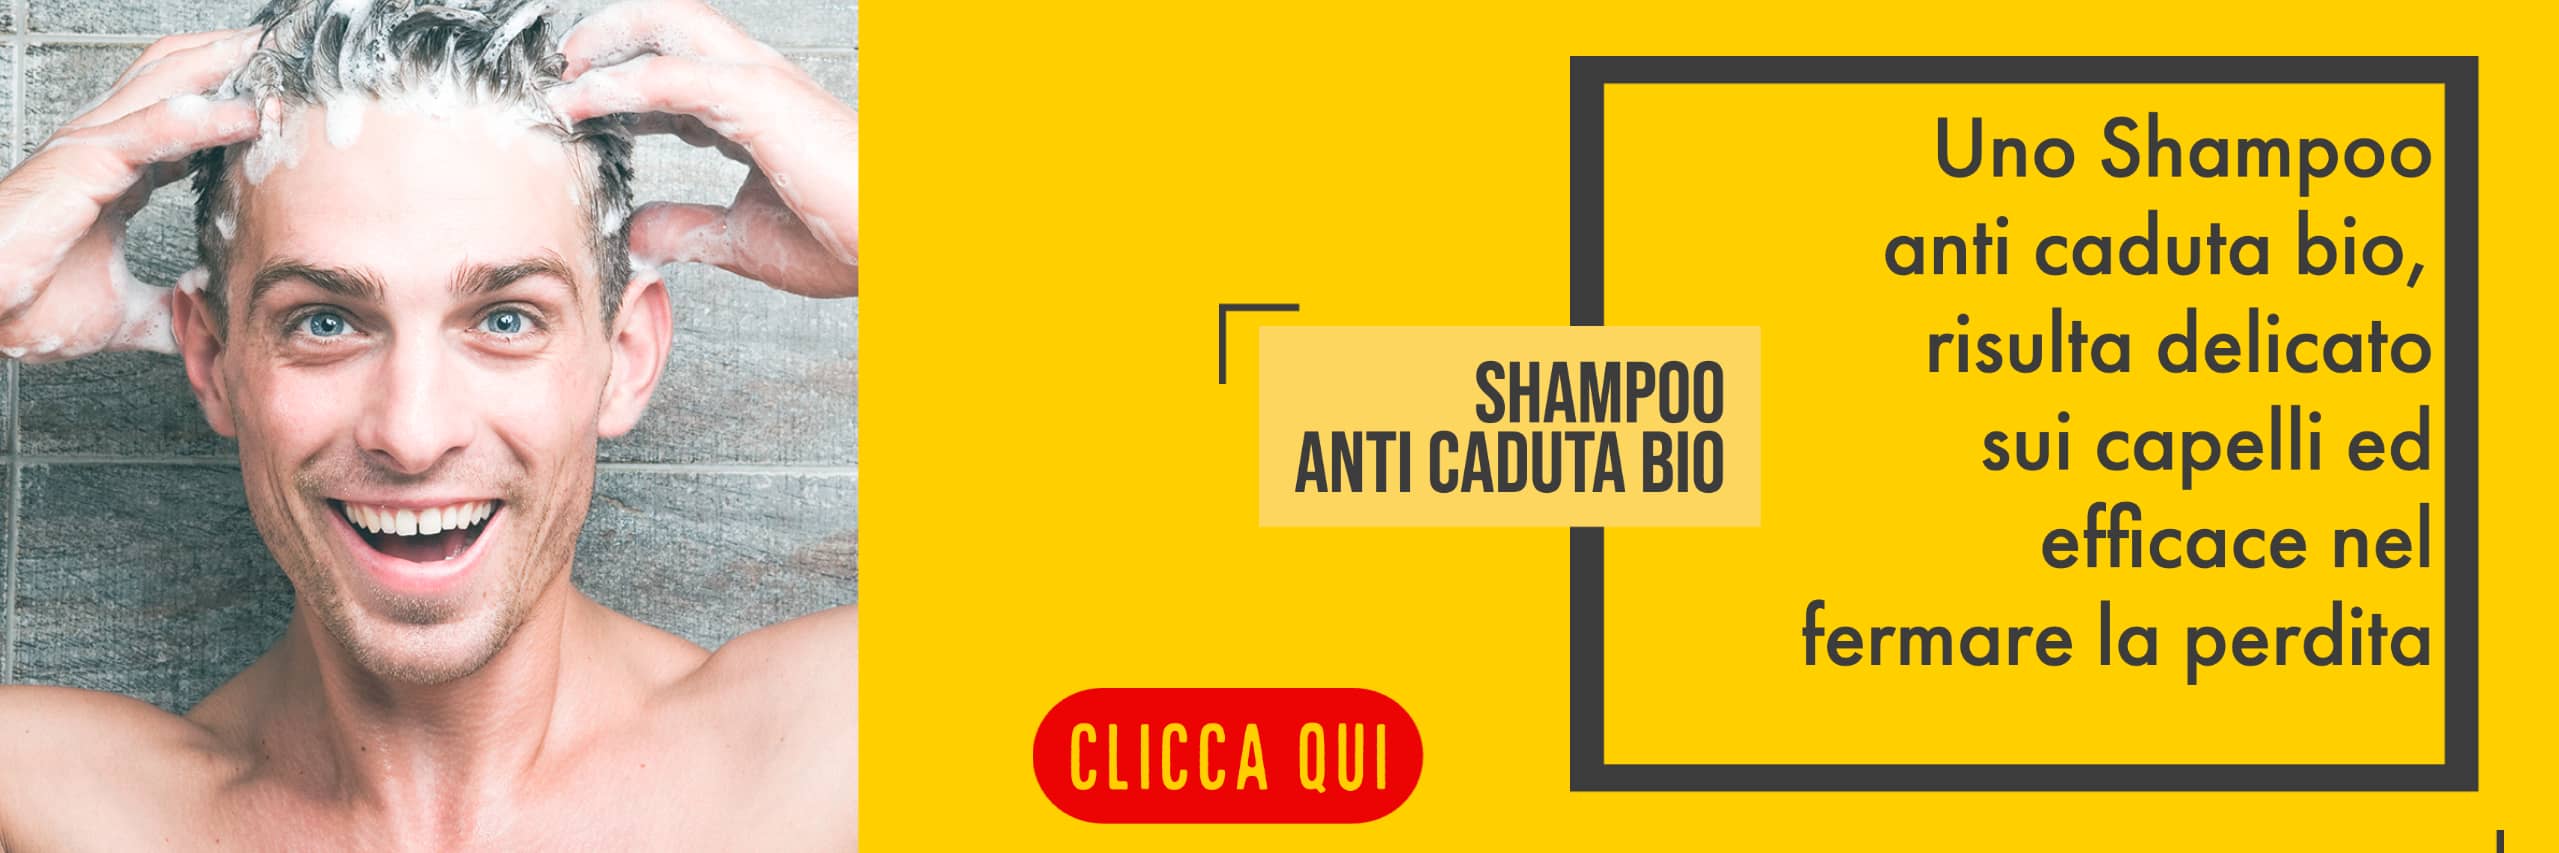 shampoo anticaduta naturale